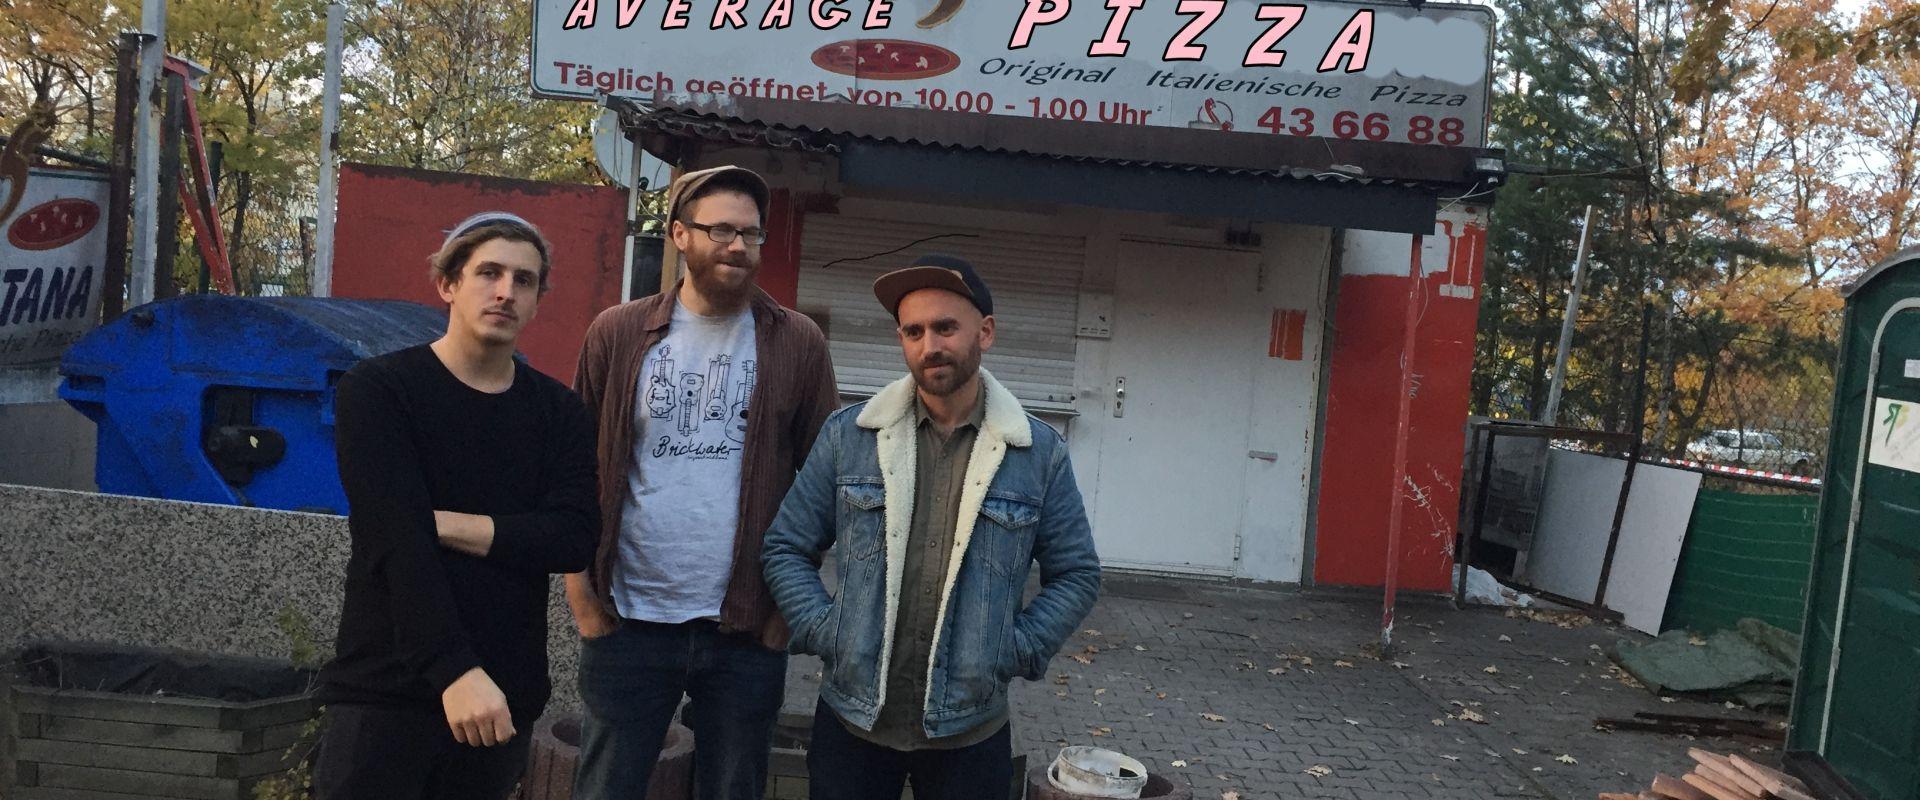 Band: Average Pizza (Rock)